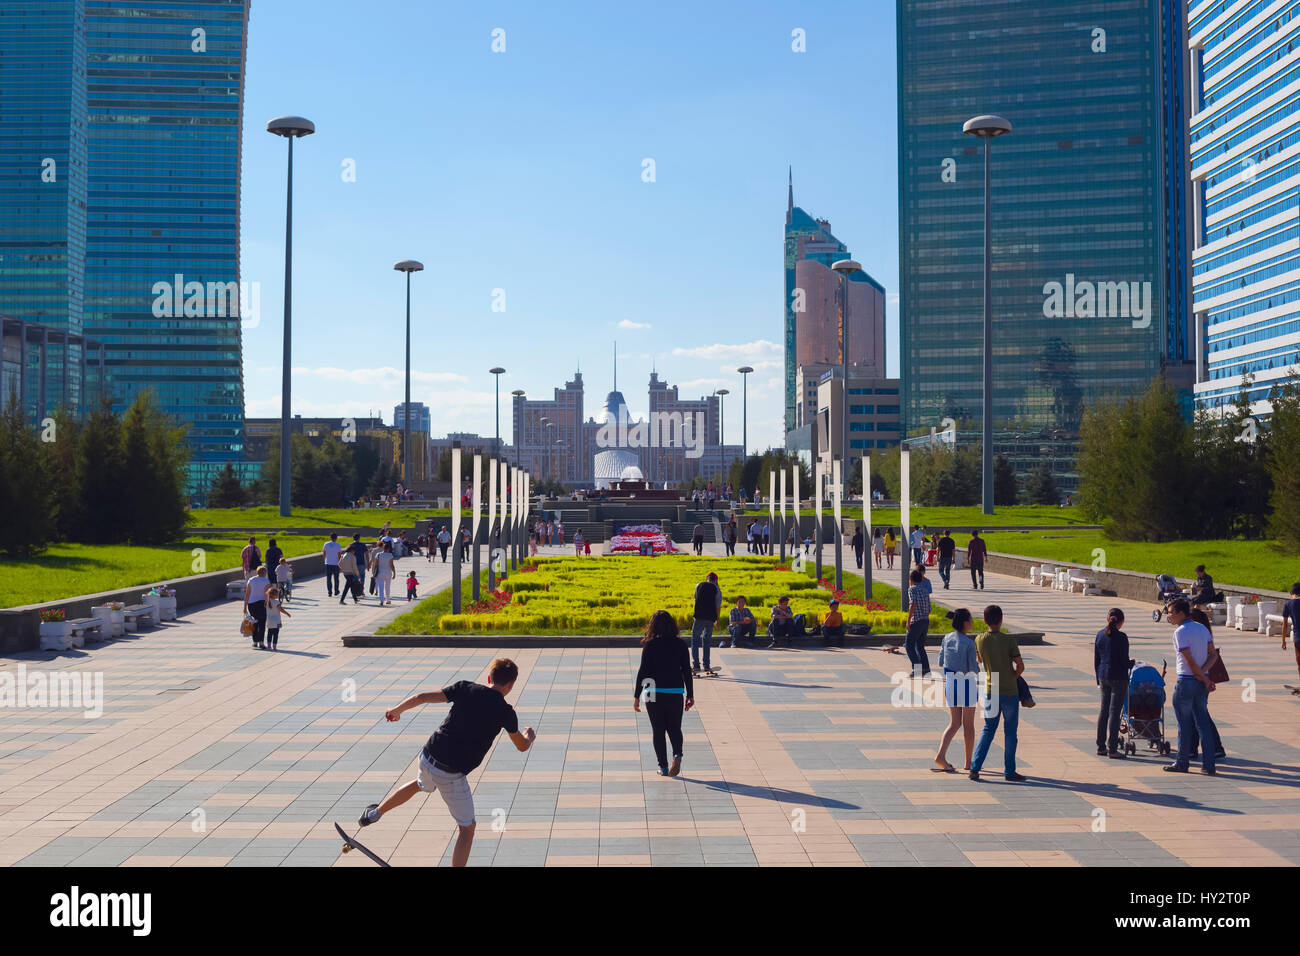 Astana - capital of Kazakhstan. People walk on city a sunny day Stock Photo